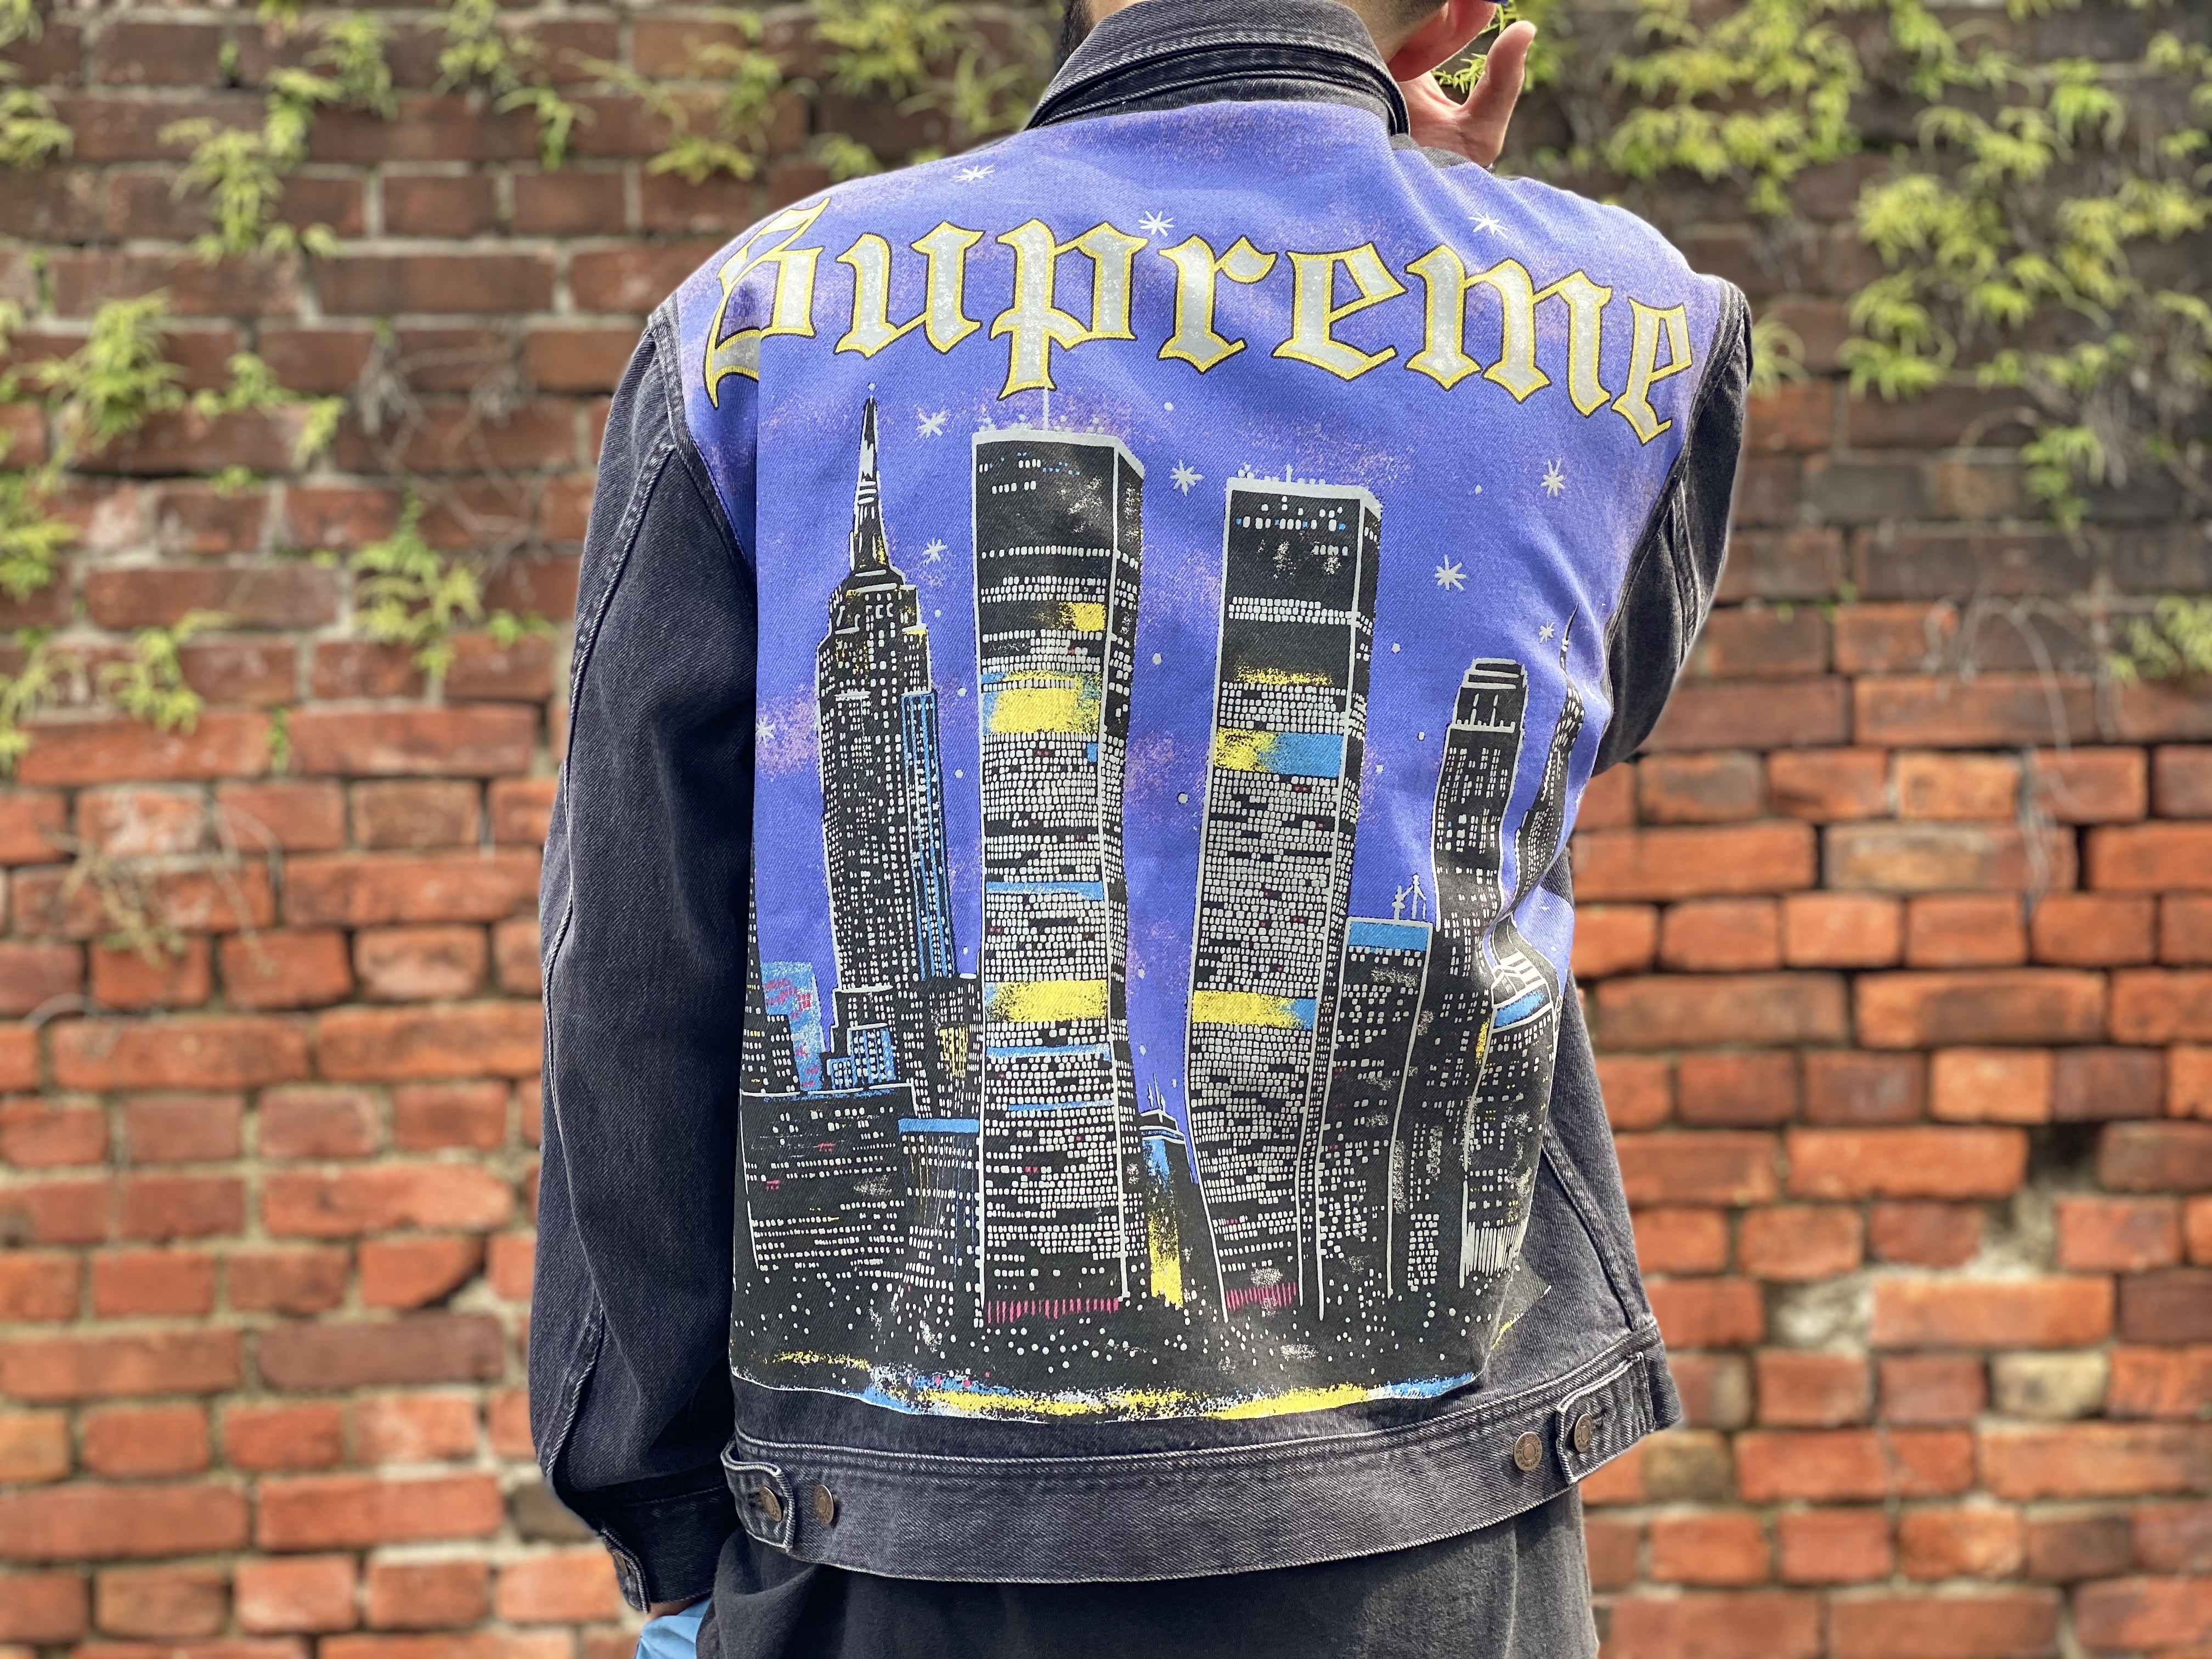 new york painted trucker jacket supreme